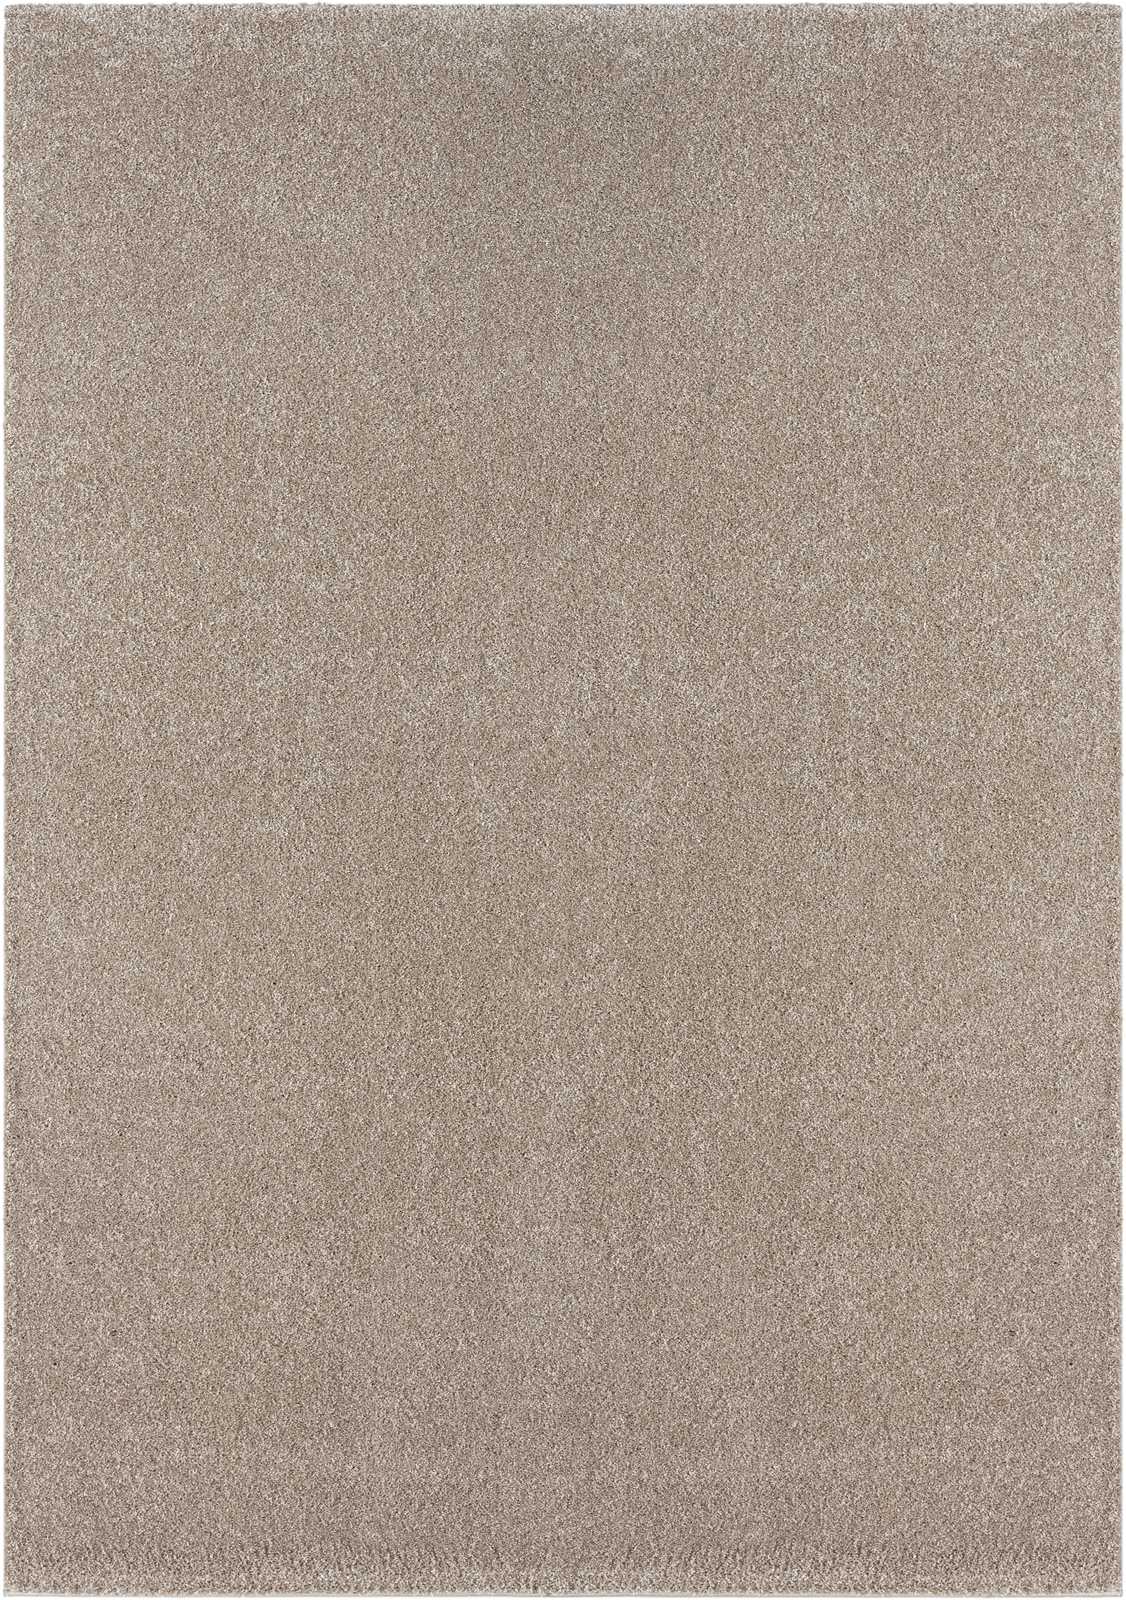             Soft short pile carpet in beige - 170 x 120 cm
        